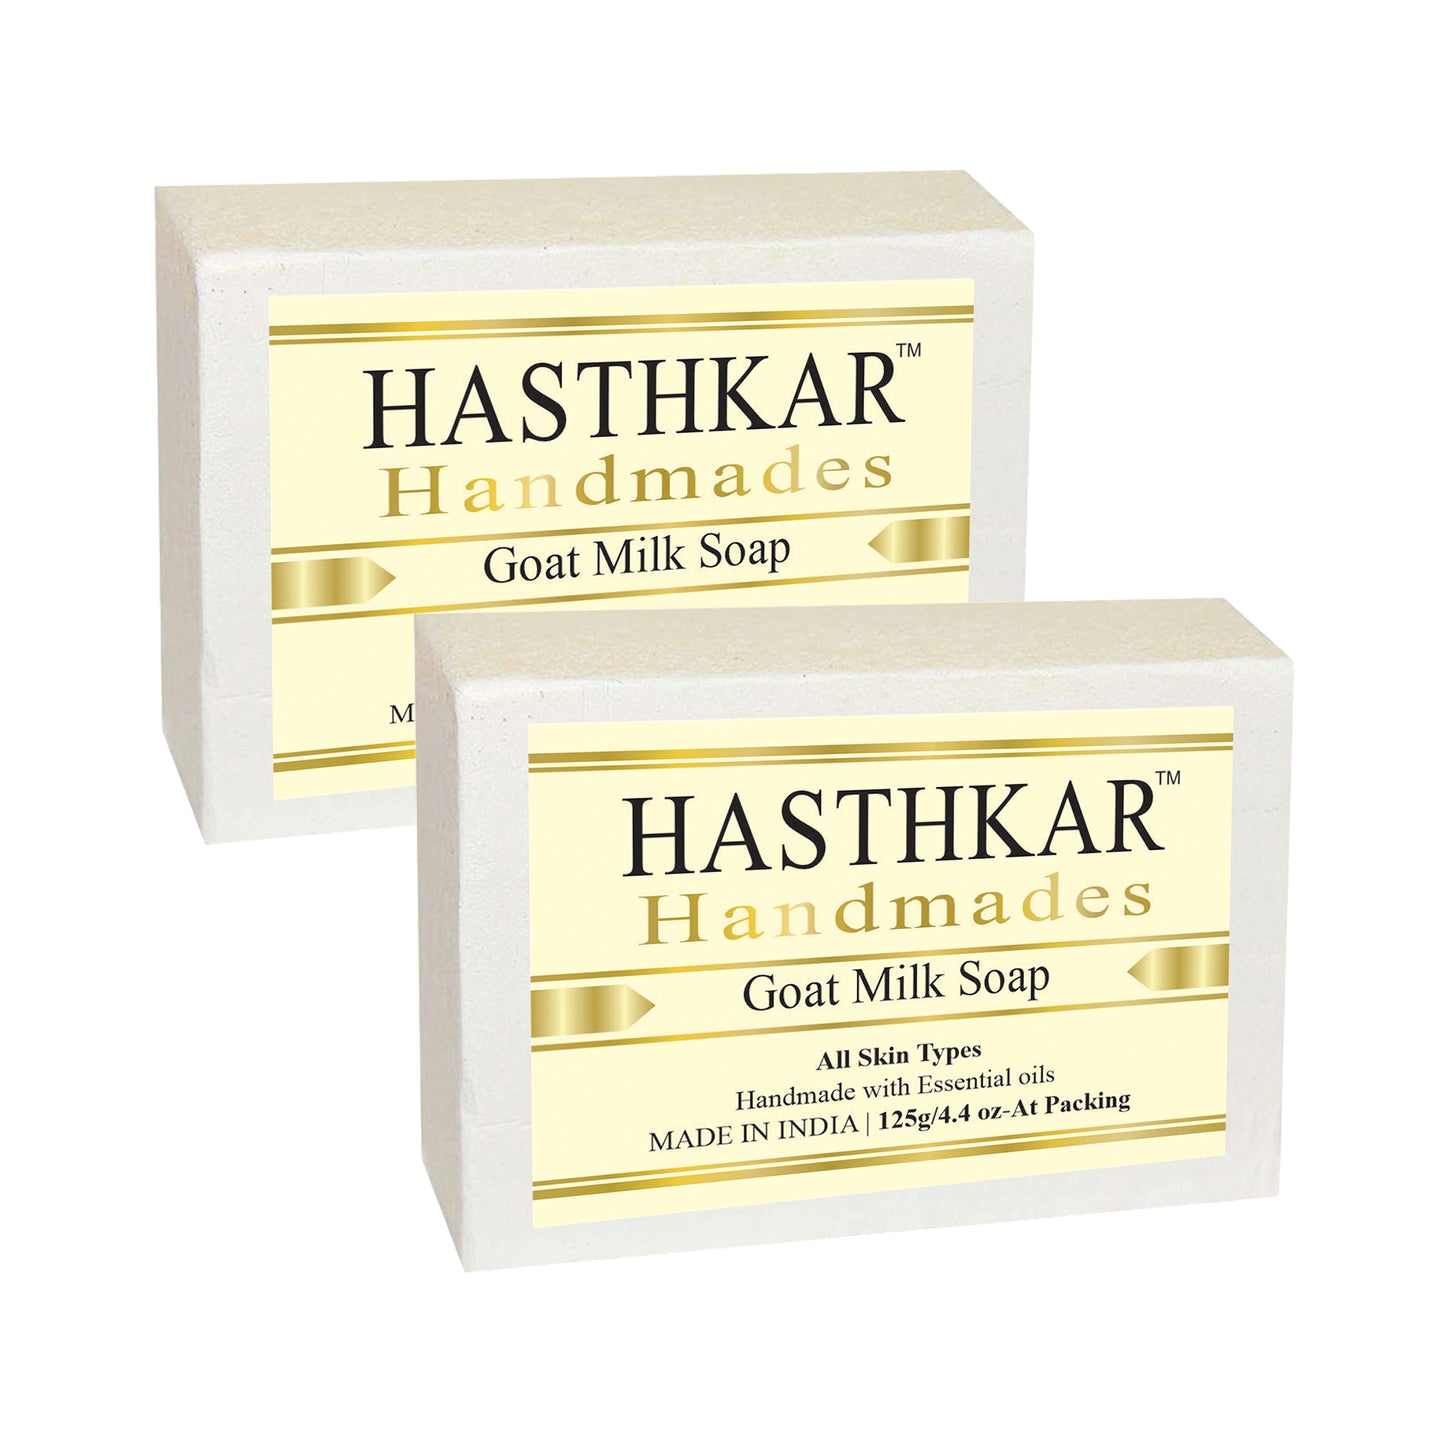 Hasthkar Handmades Glycerine Goat milk Soap 125gm Pack of 2